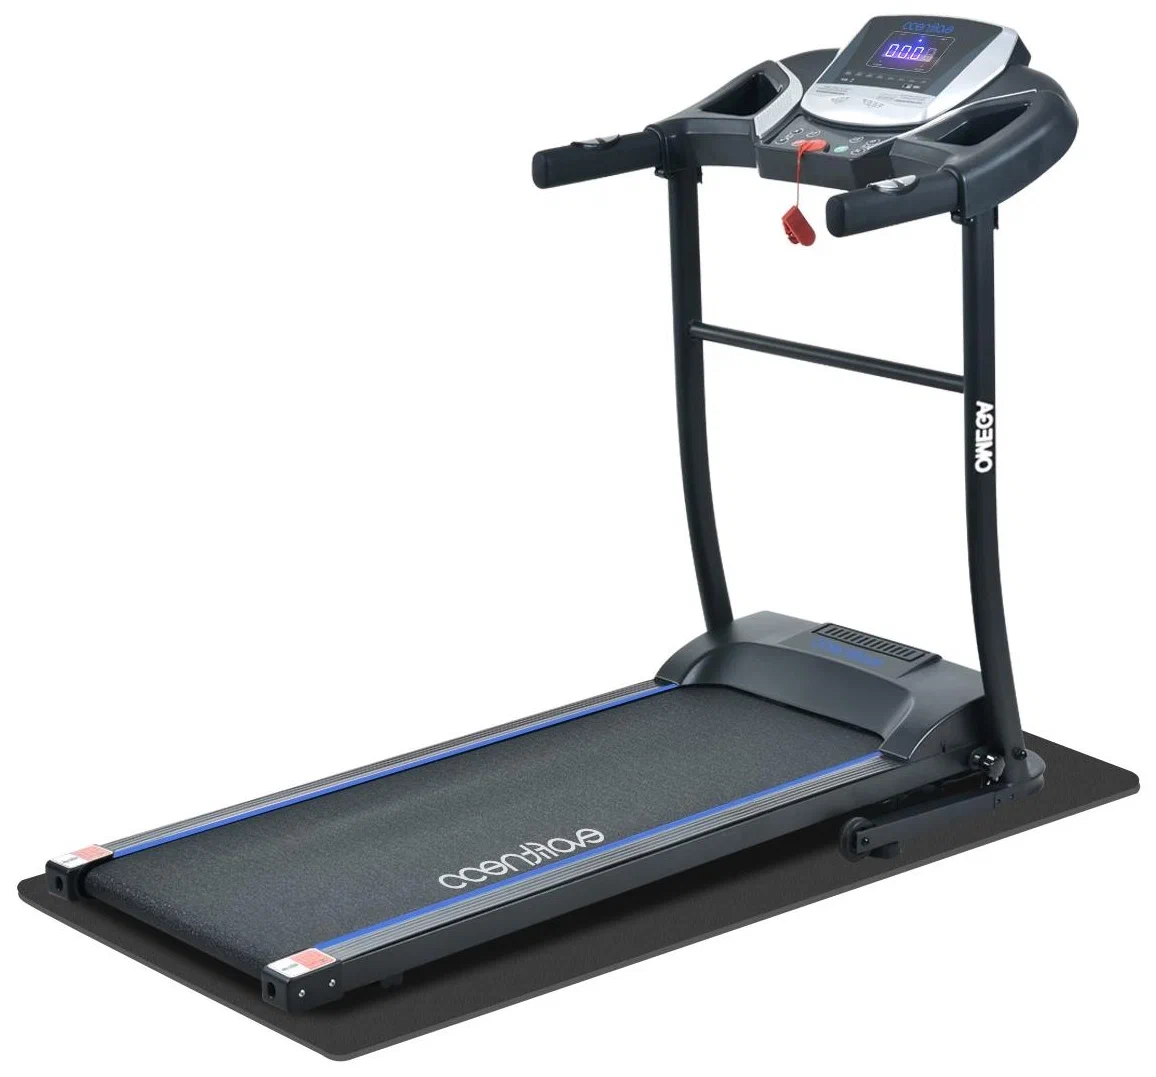 Evo Fitness Omega - вес пользователя до 110 кг